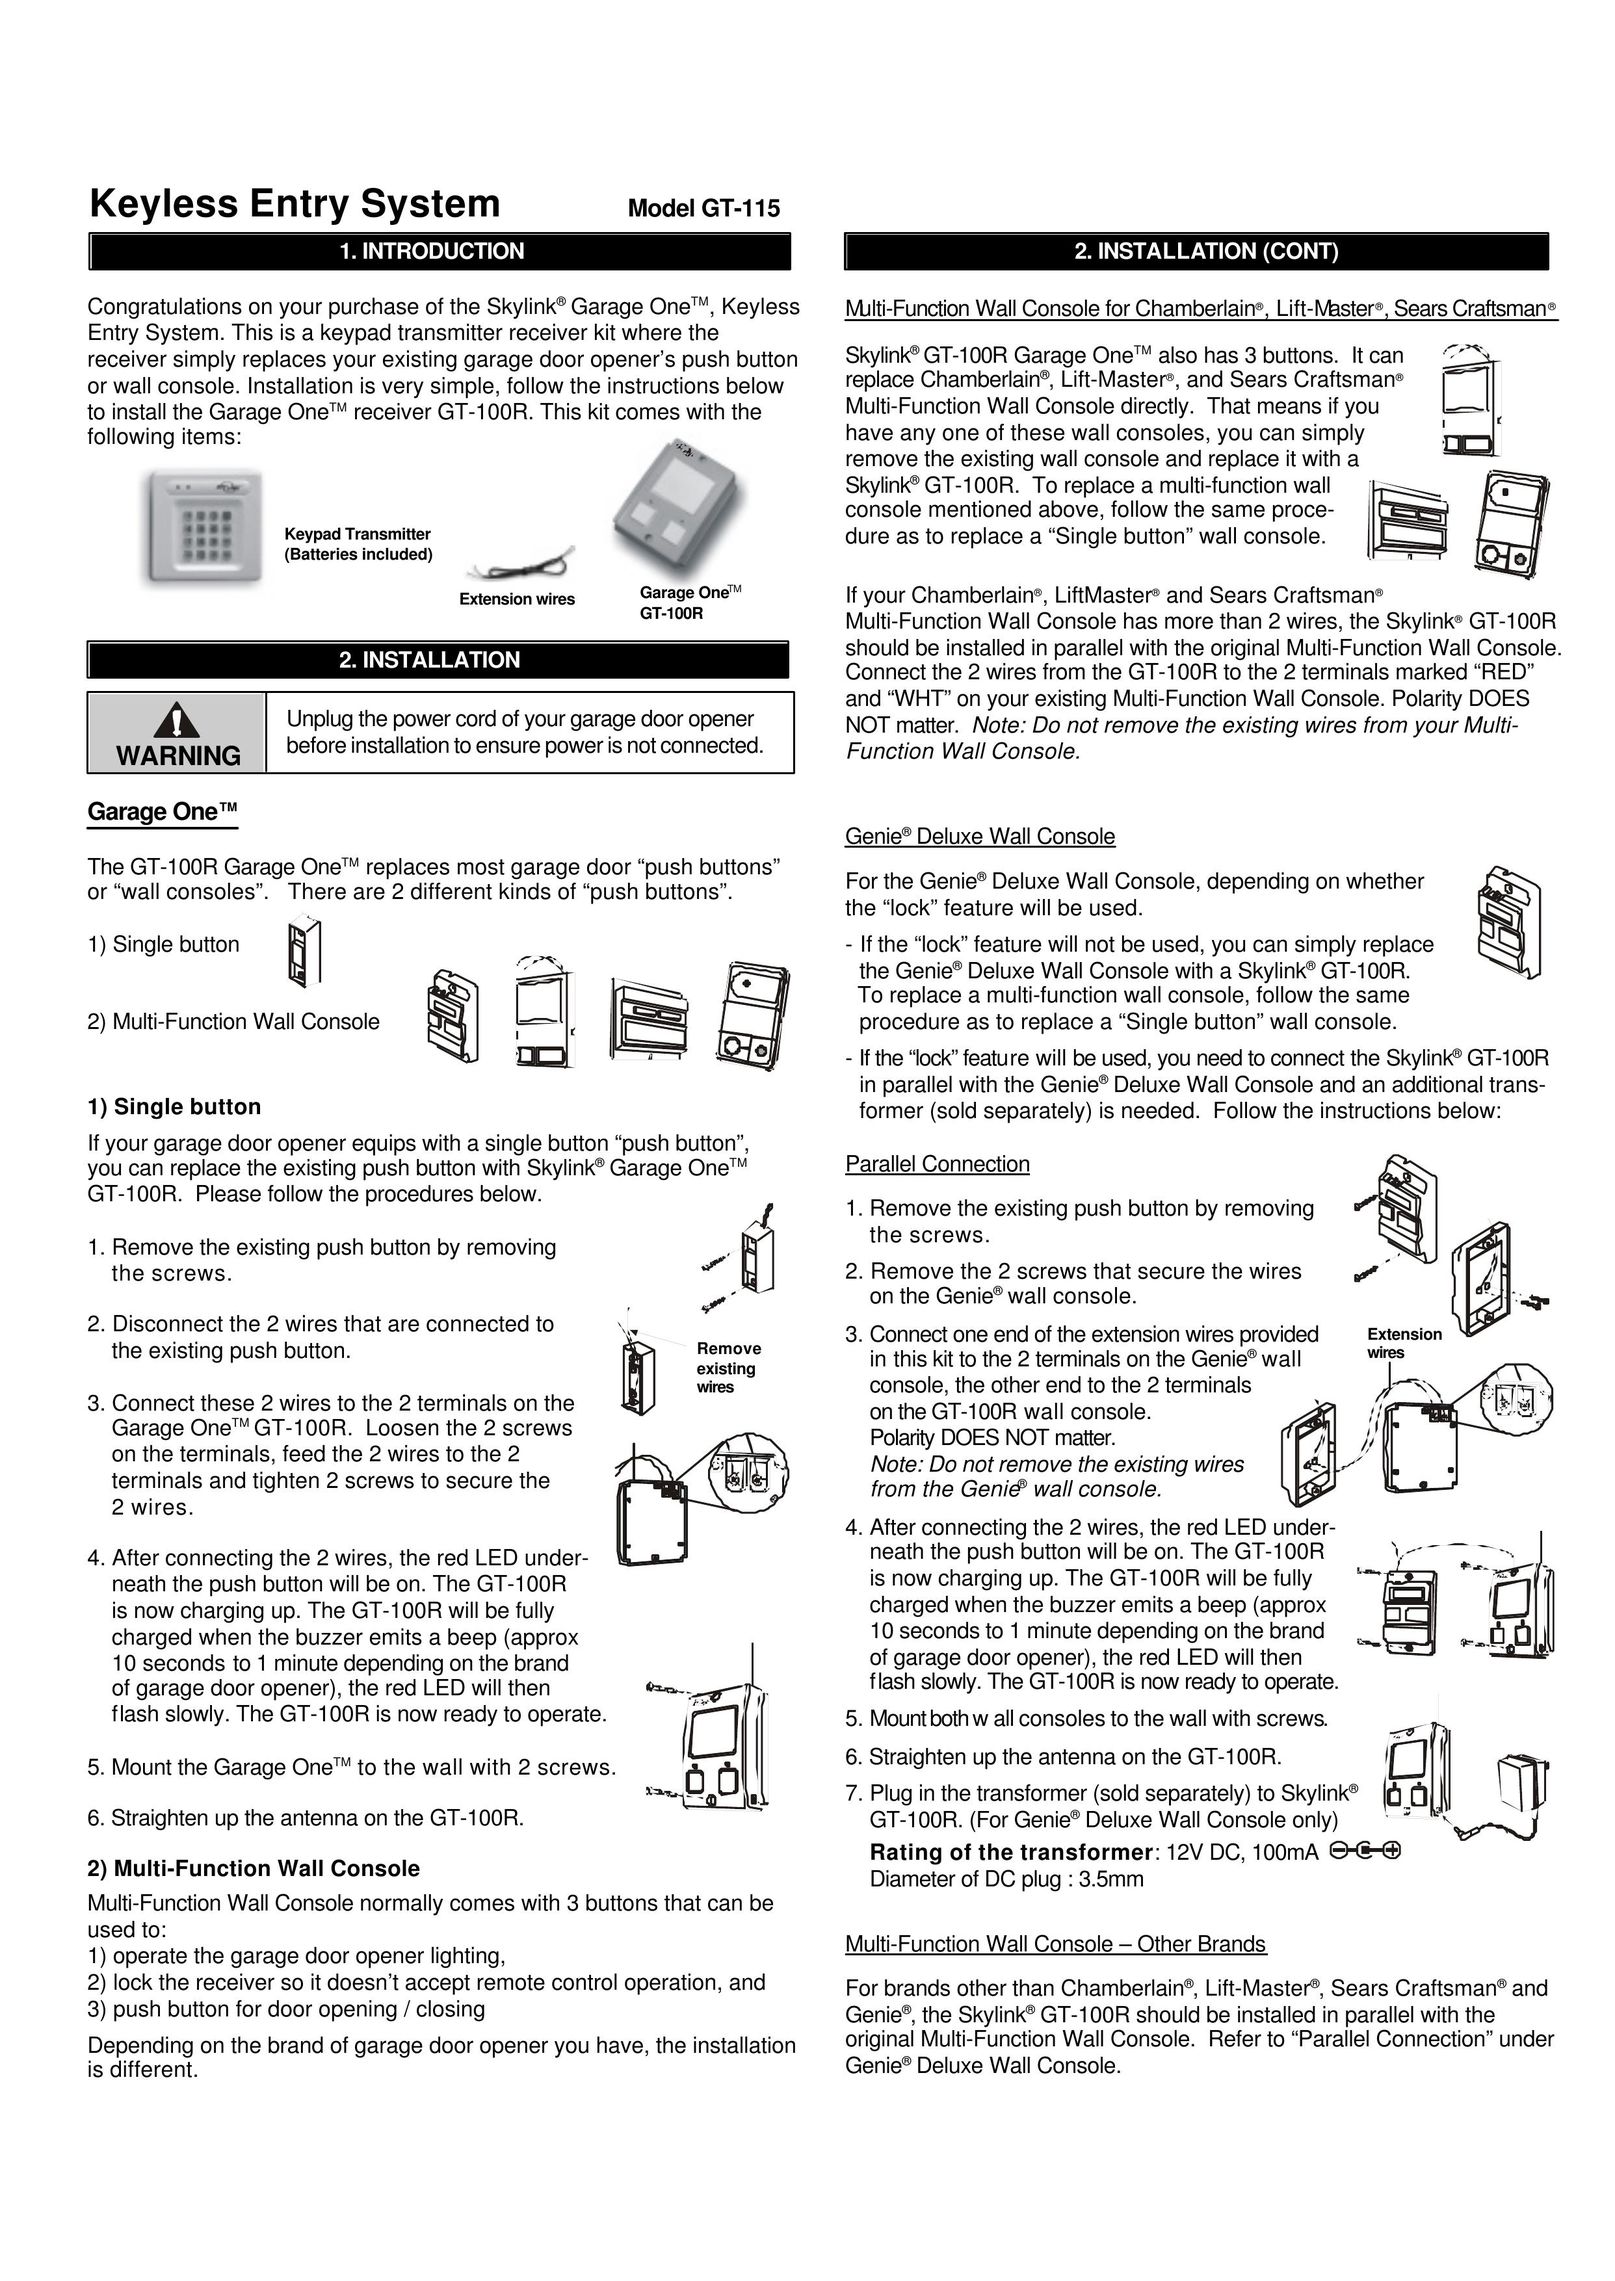 SkyLink Keyless Entry System Garage Door Opener User Manual